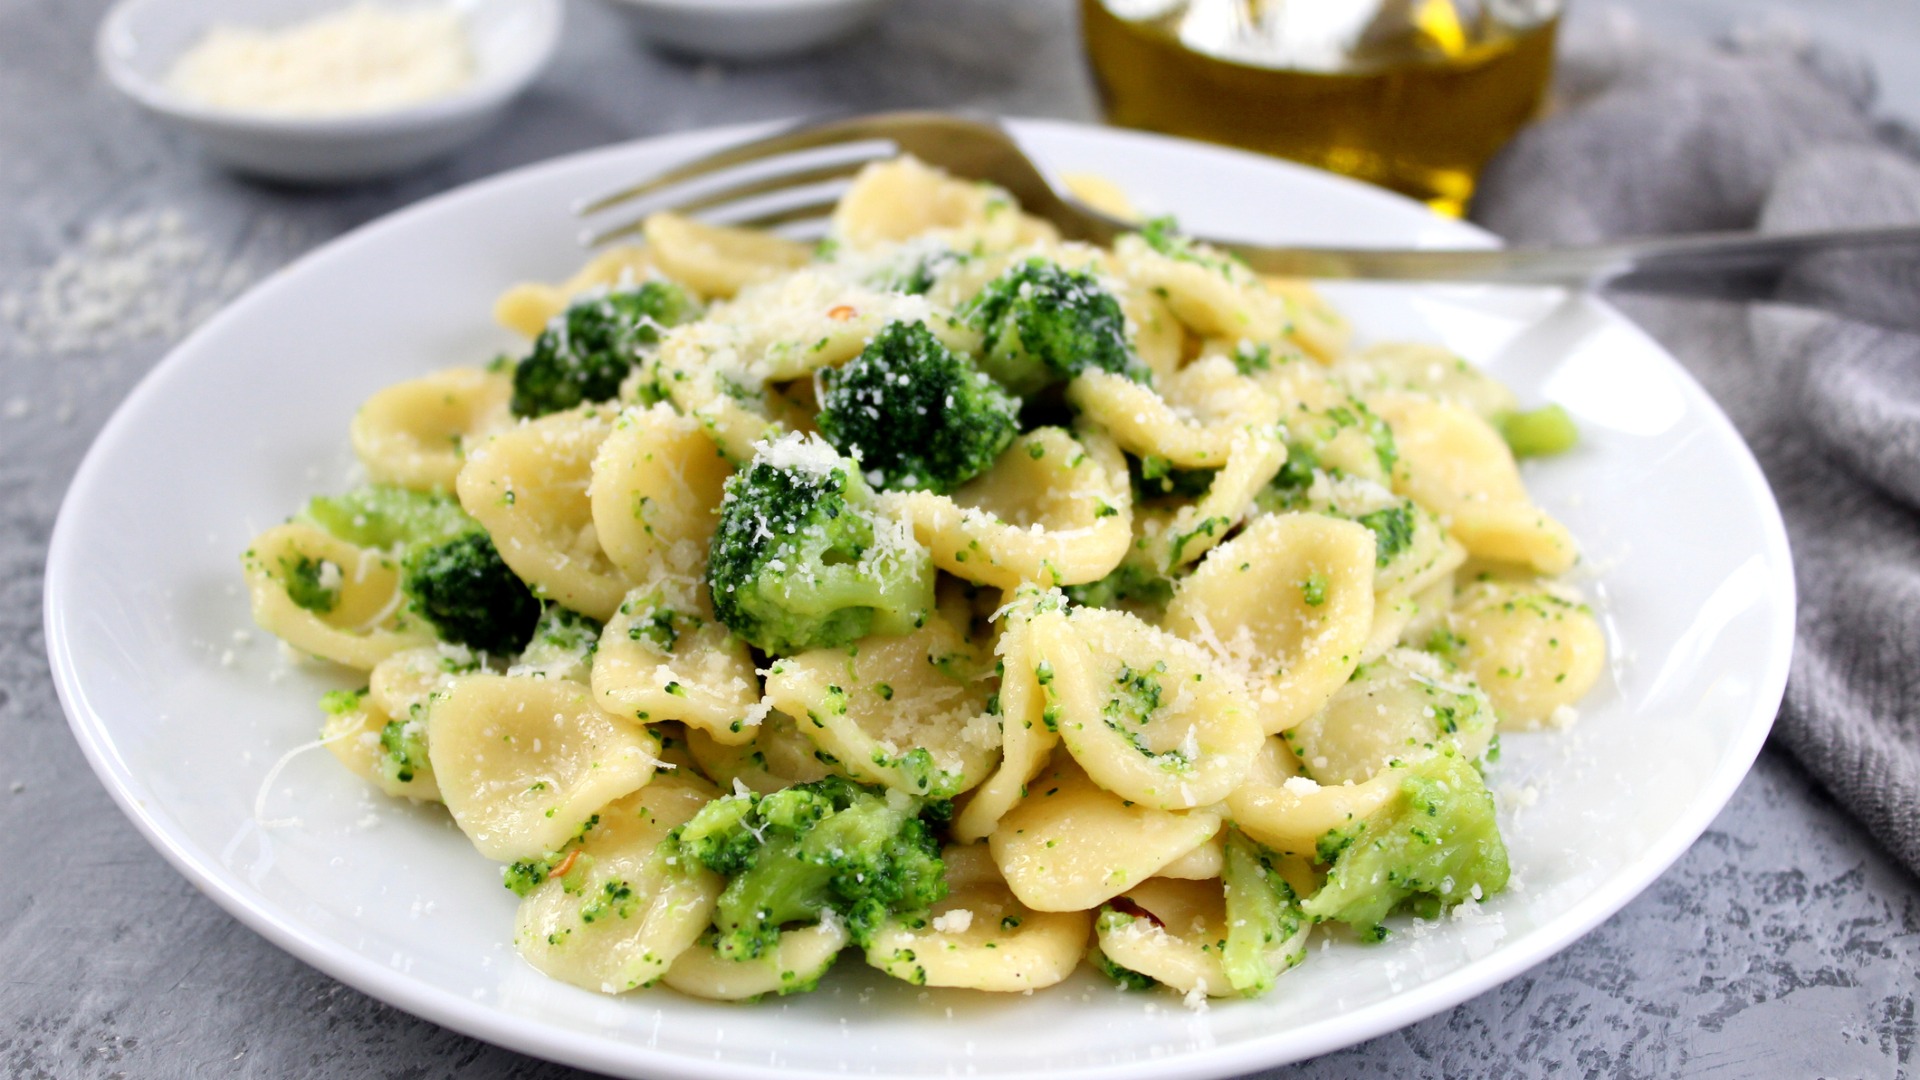 A dish of Orecchiette pasta with broccoli and grated Parmiggiano cheese. 